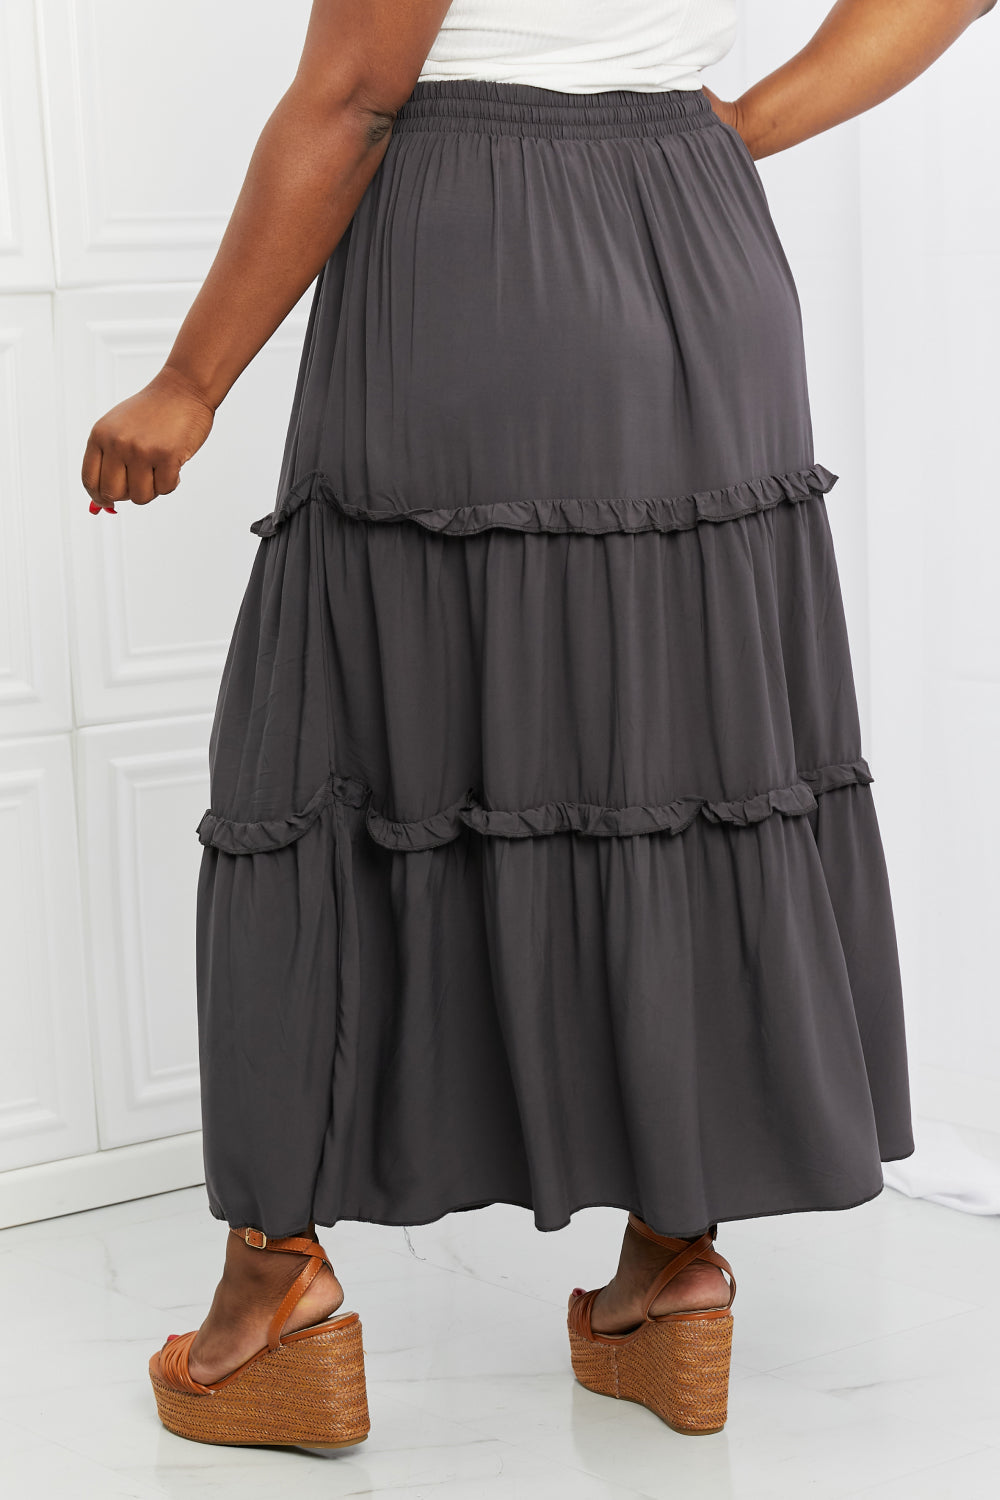 Zenana Summer Days Full Size Ruffled Maxi Skirt in Ash Grey